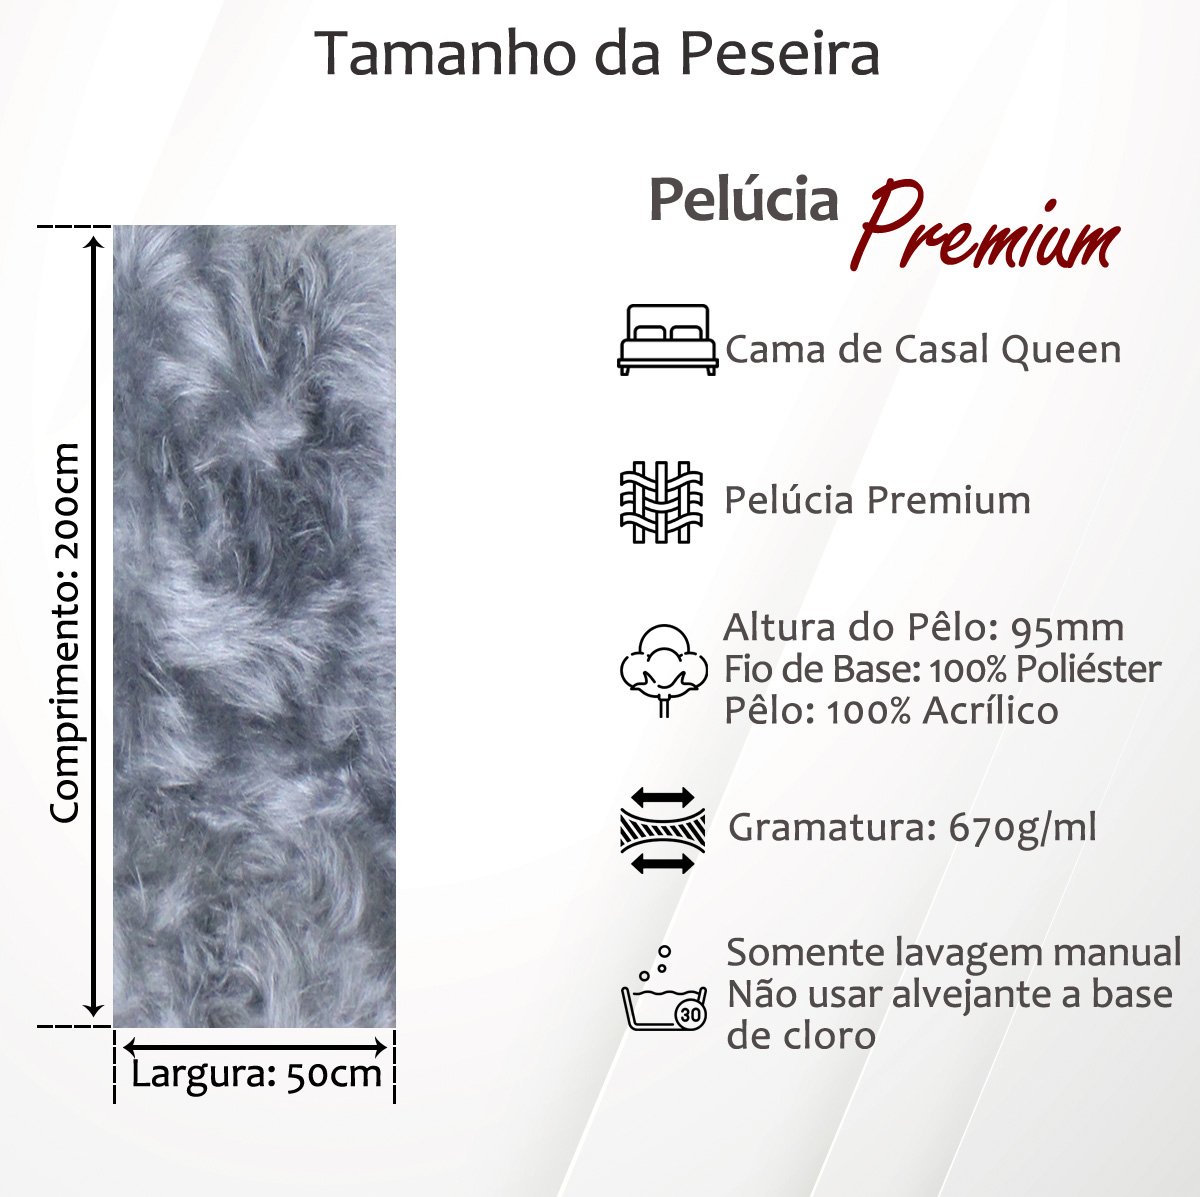 Peseira Premium Pelúcia Pelo Alto Cama Casal Queen Size 2,2mx50cm + 2 Capas de Almofada Pelúcia Prem - 4